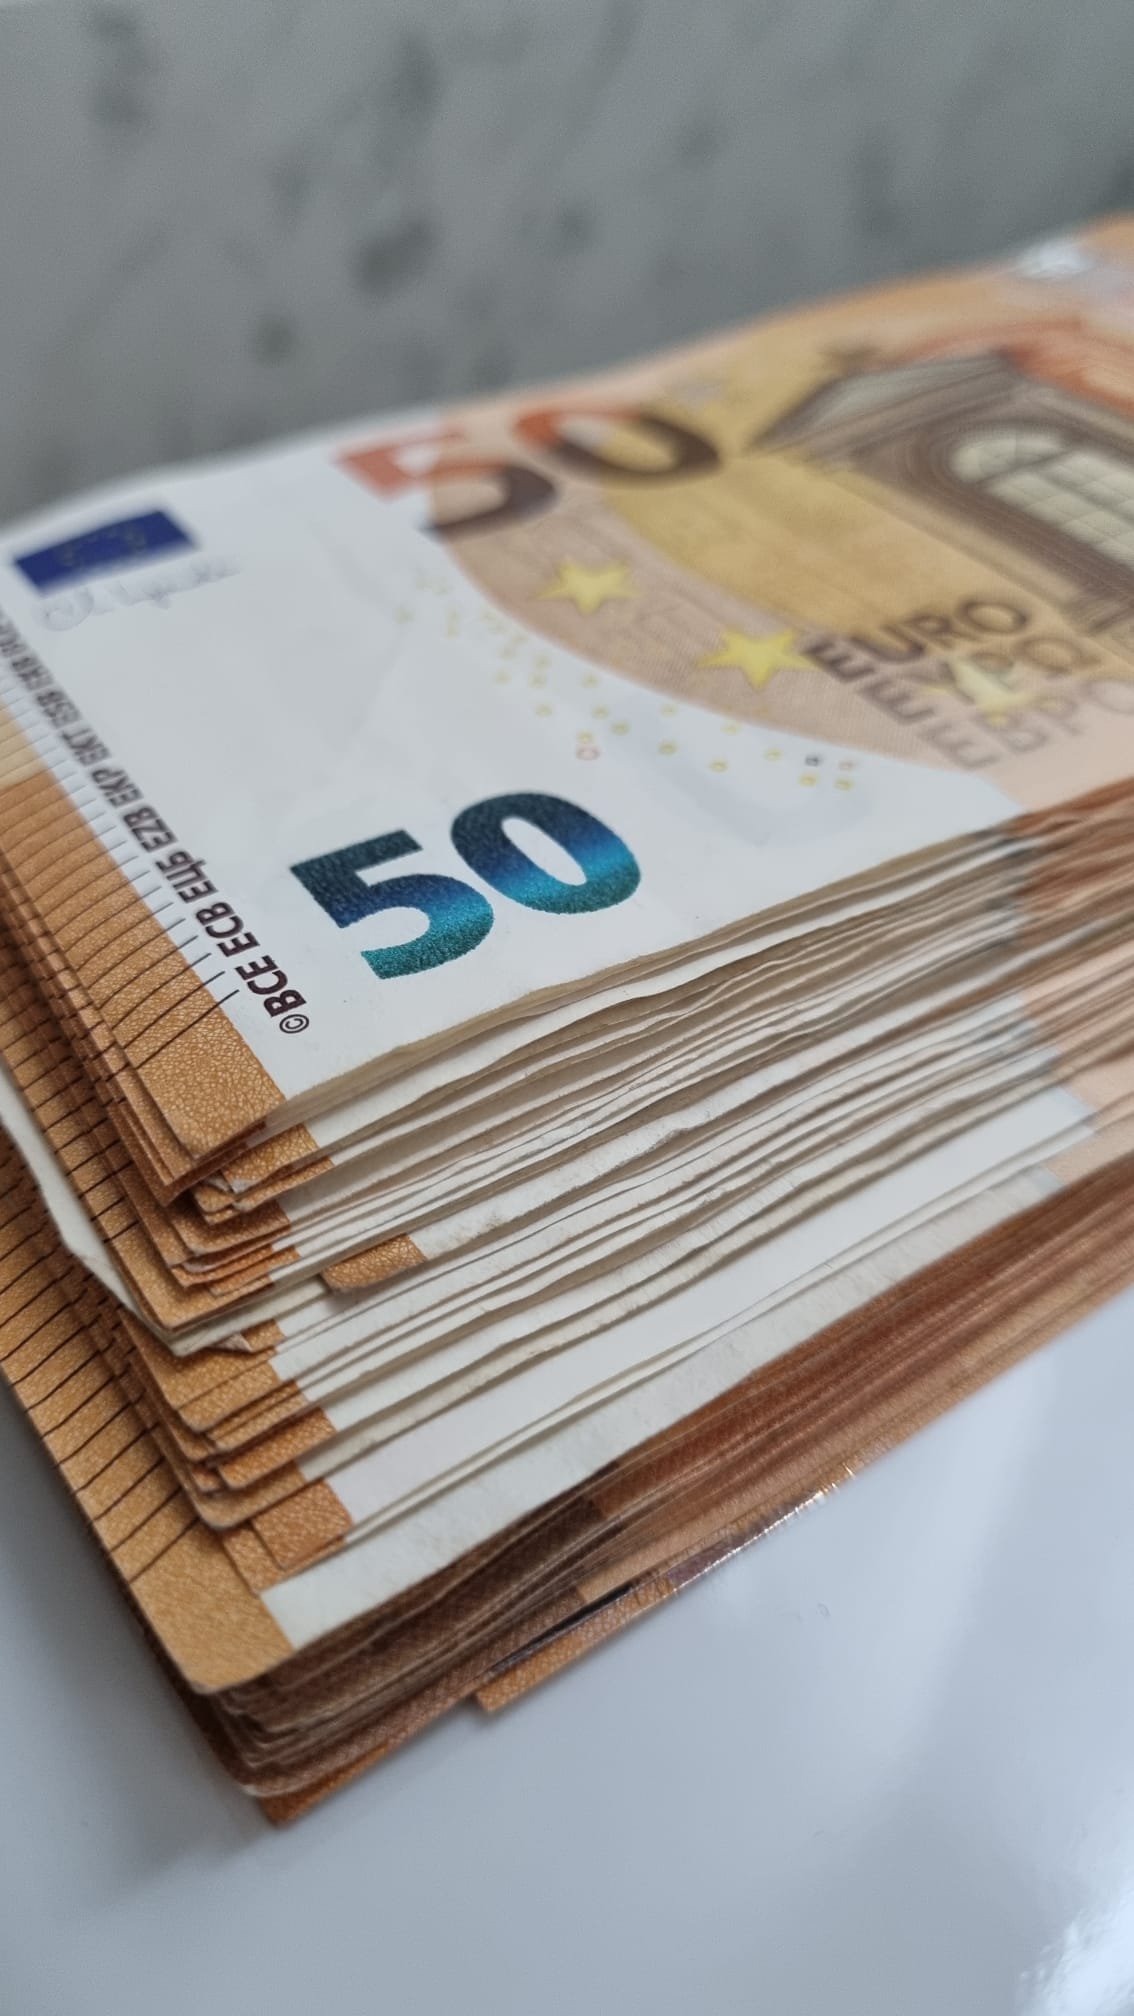 Gardai found cash amounting to €2,555